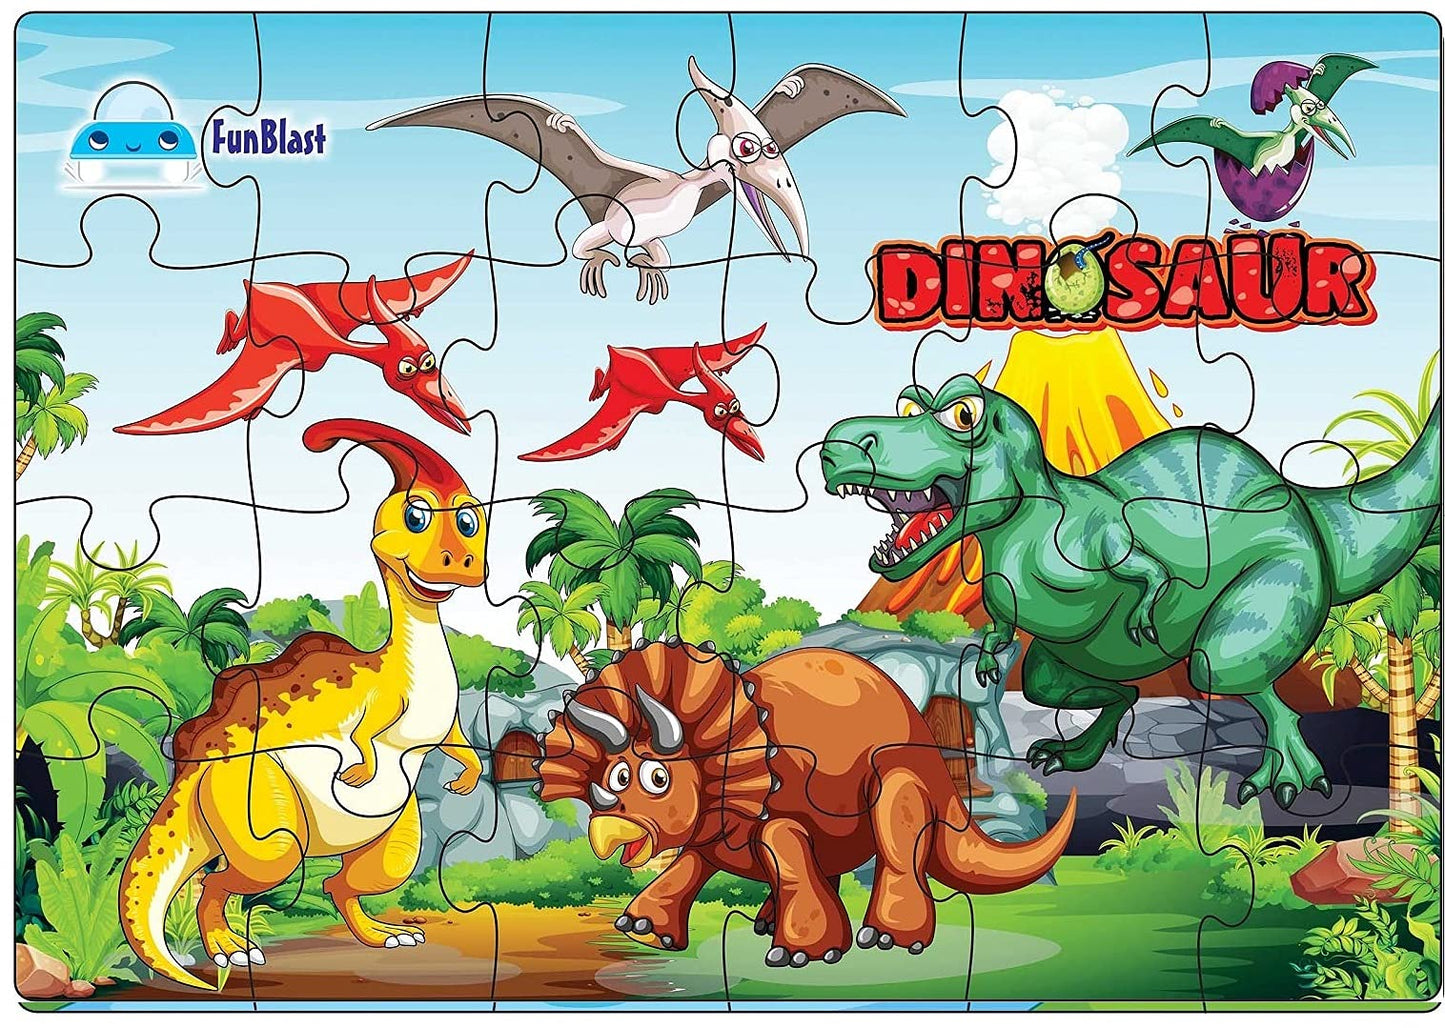 FunBlast Wild Animal Jigsaw Puzzle for Kids Jigsaw Puzzle for Kids of Age 3-5 Years – 24 Pcs (Multicolor, Size 30X22 cm)